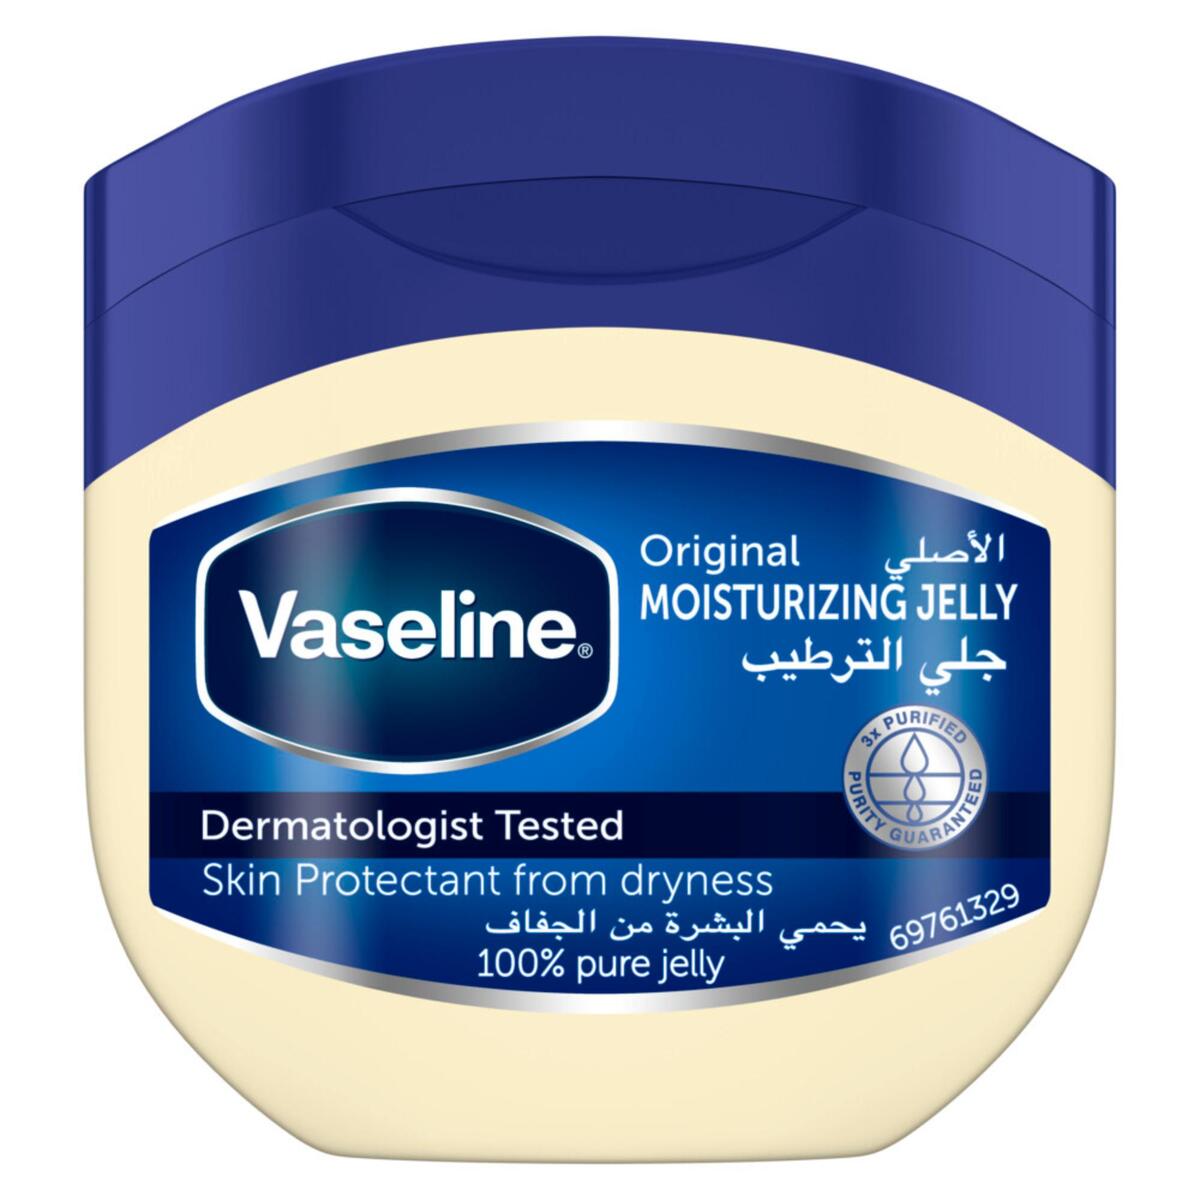 Vaseline Petroleum Jelly Original 100 ml